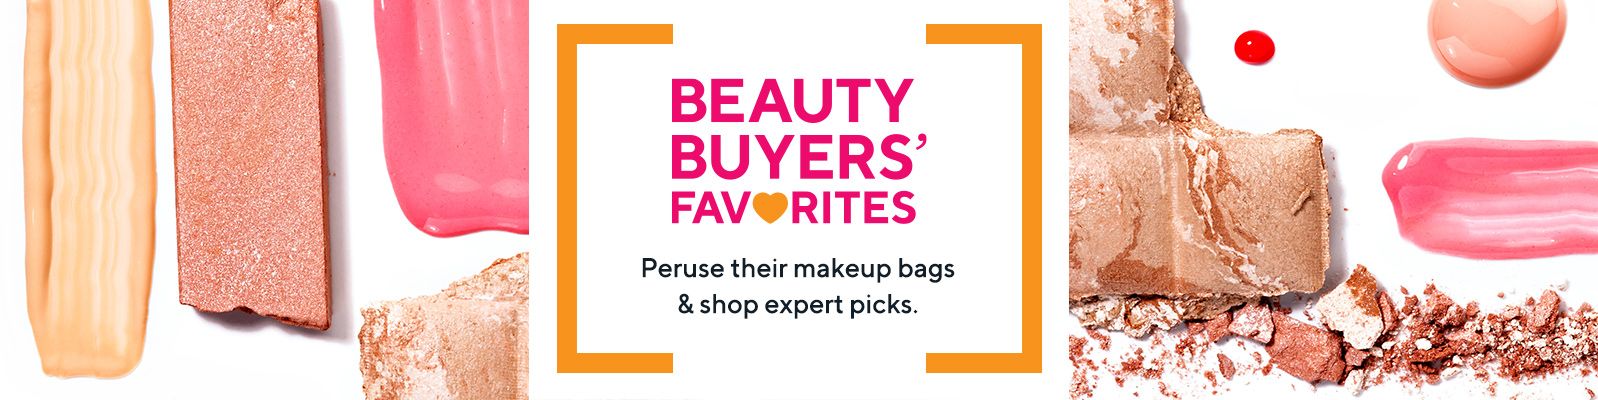 Beauty Buyers' Favorites - Peruse their makeup bags & shop expert picks.